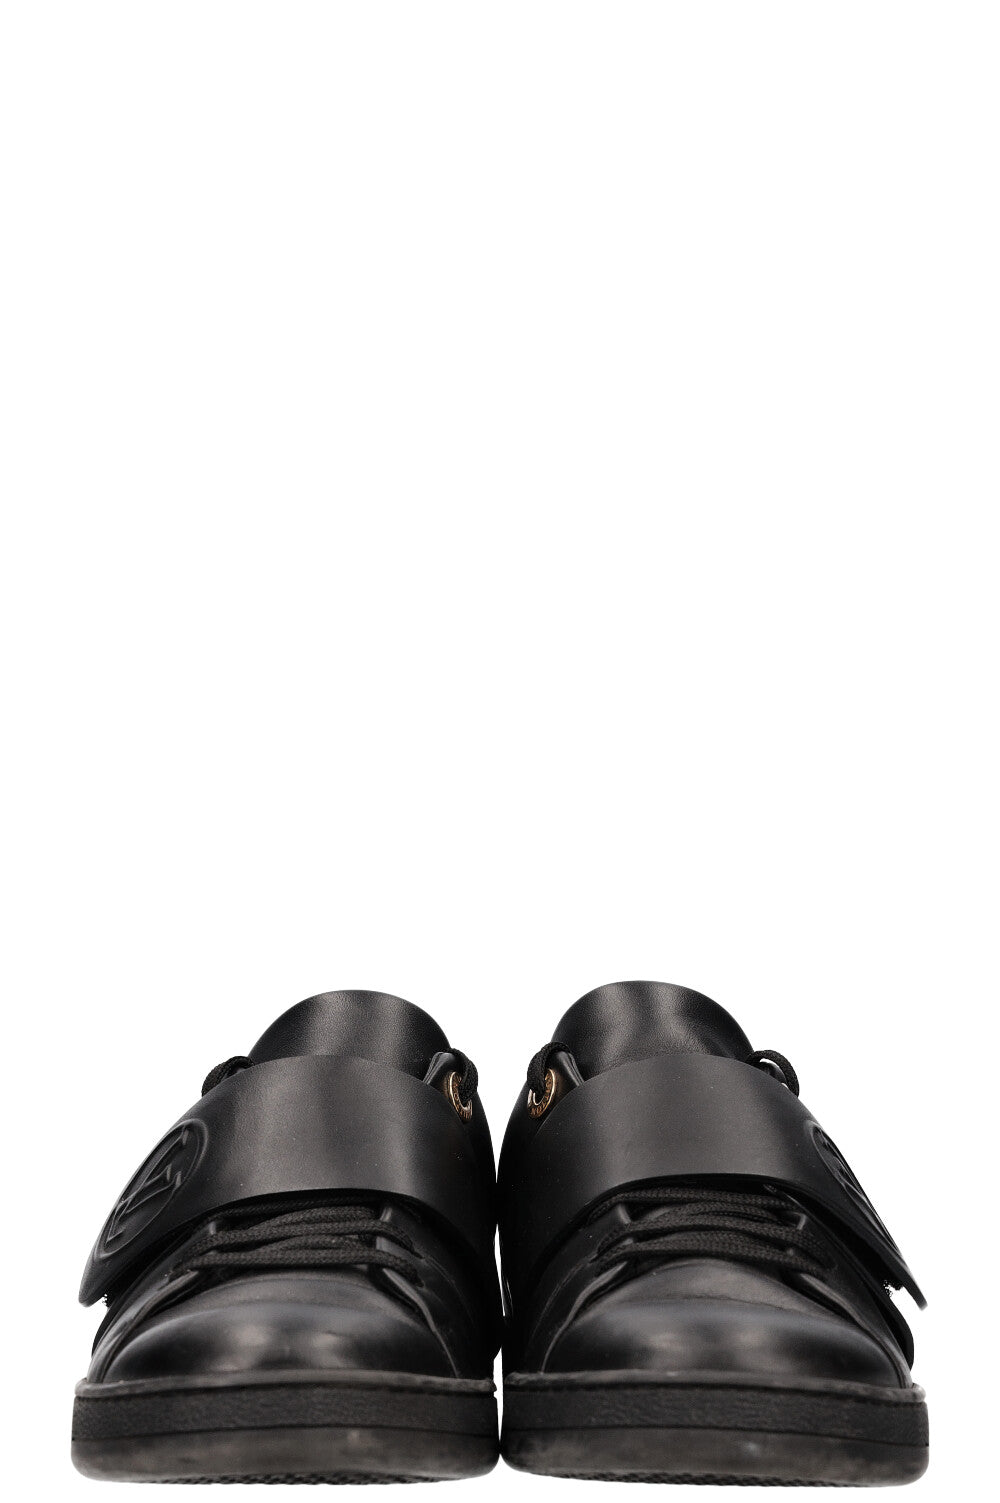 LOUIS VUITTON LV Sneakers Black